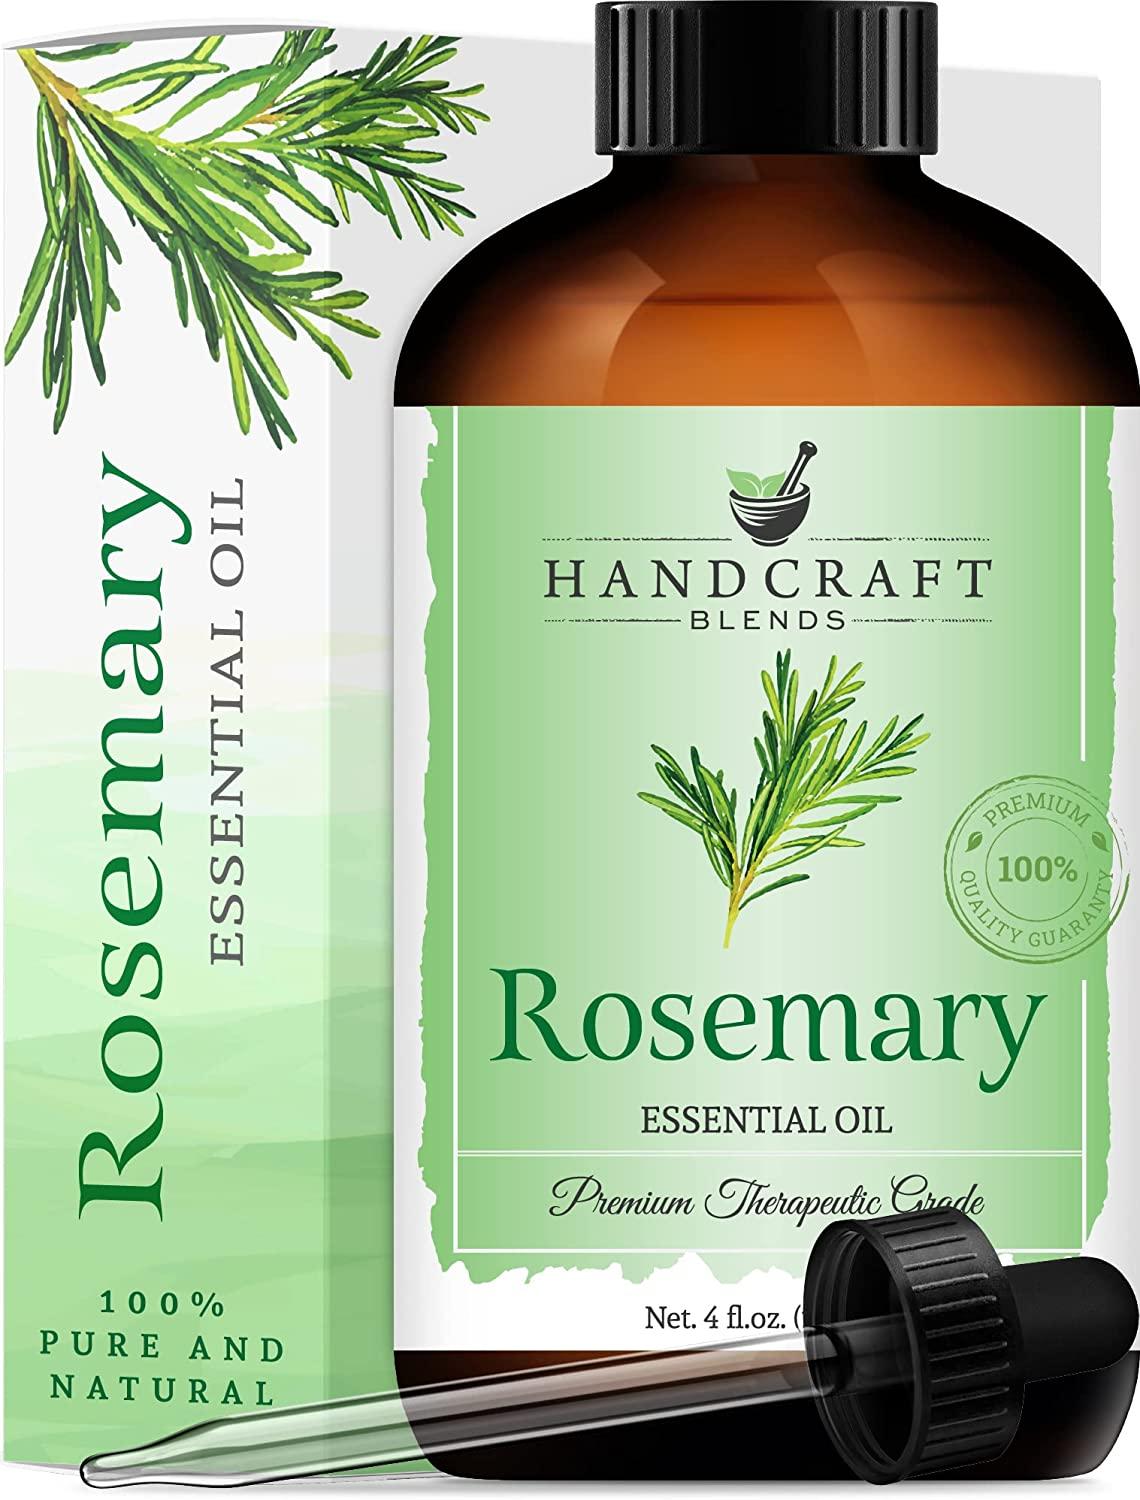 Handcraft Rosemary Essential Oil - Handcraft Blends - Chipi Online